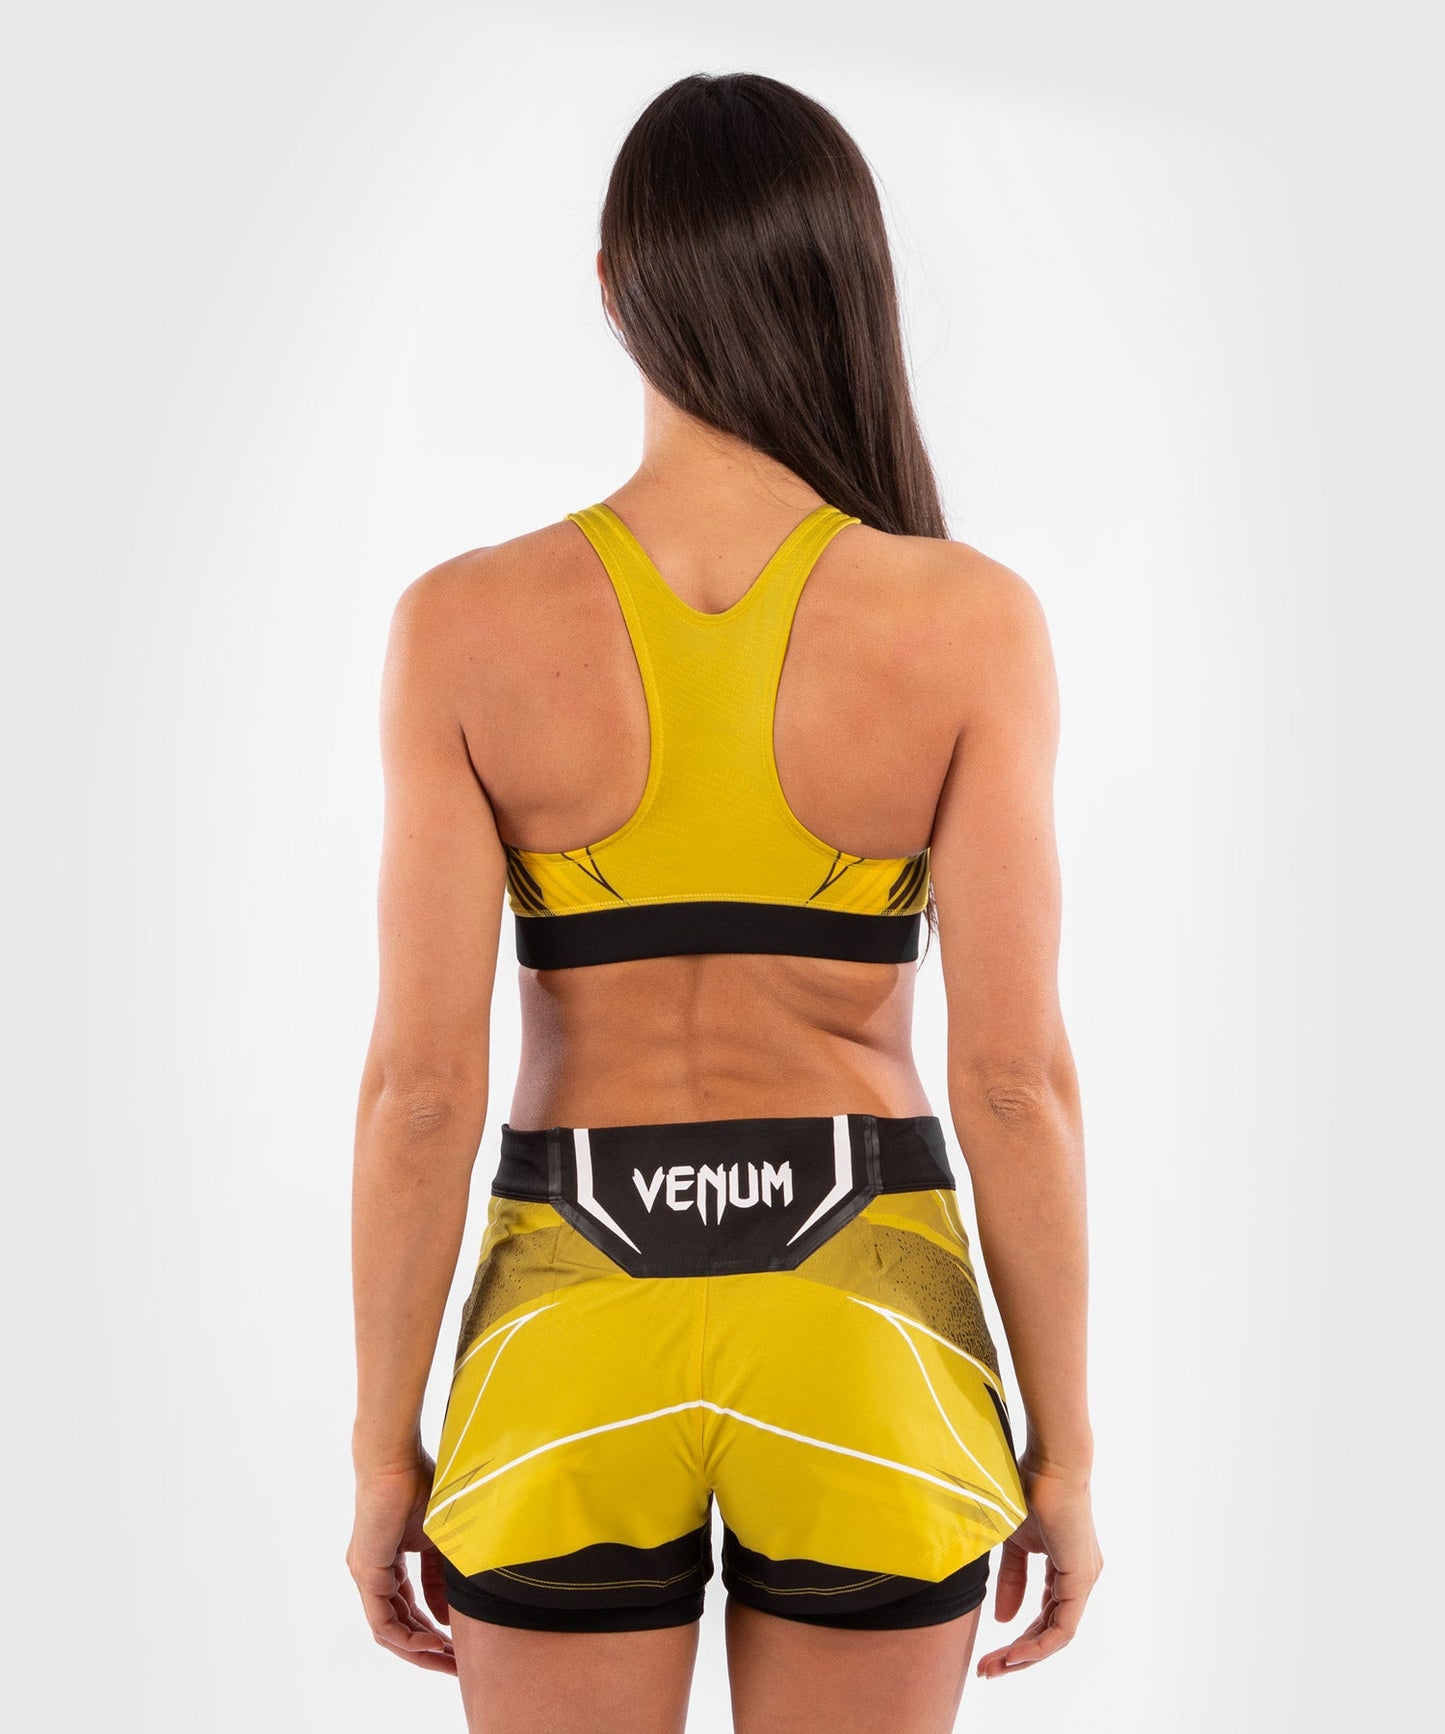 UFC Venum Authentic Fight Night Women's Sport Bra - Yellow